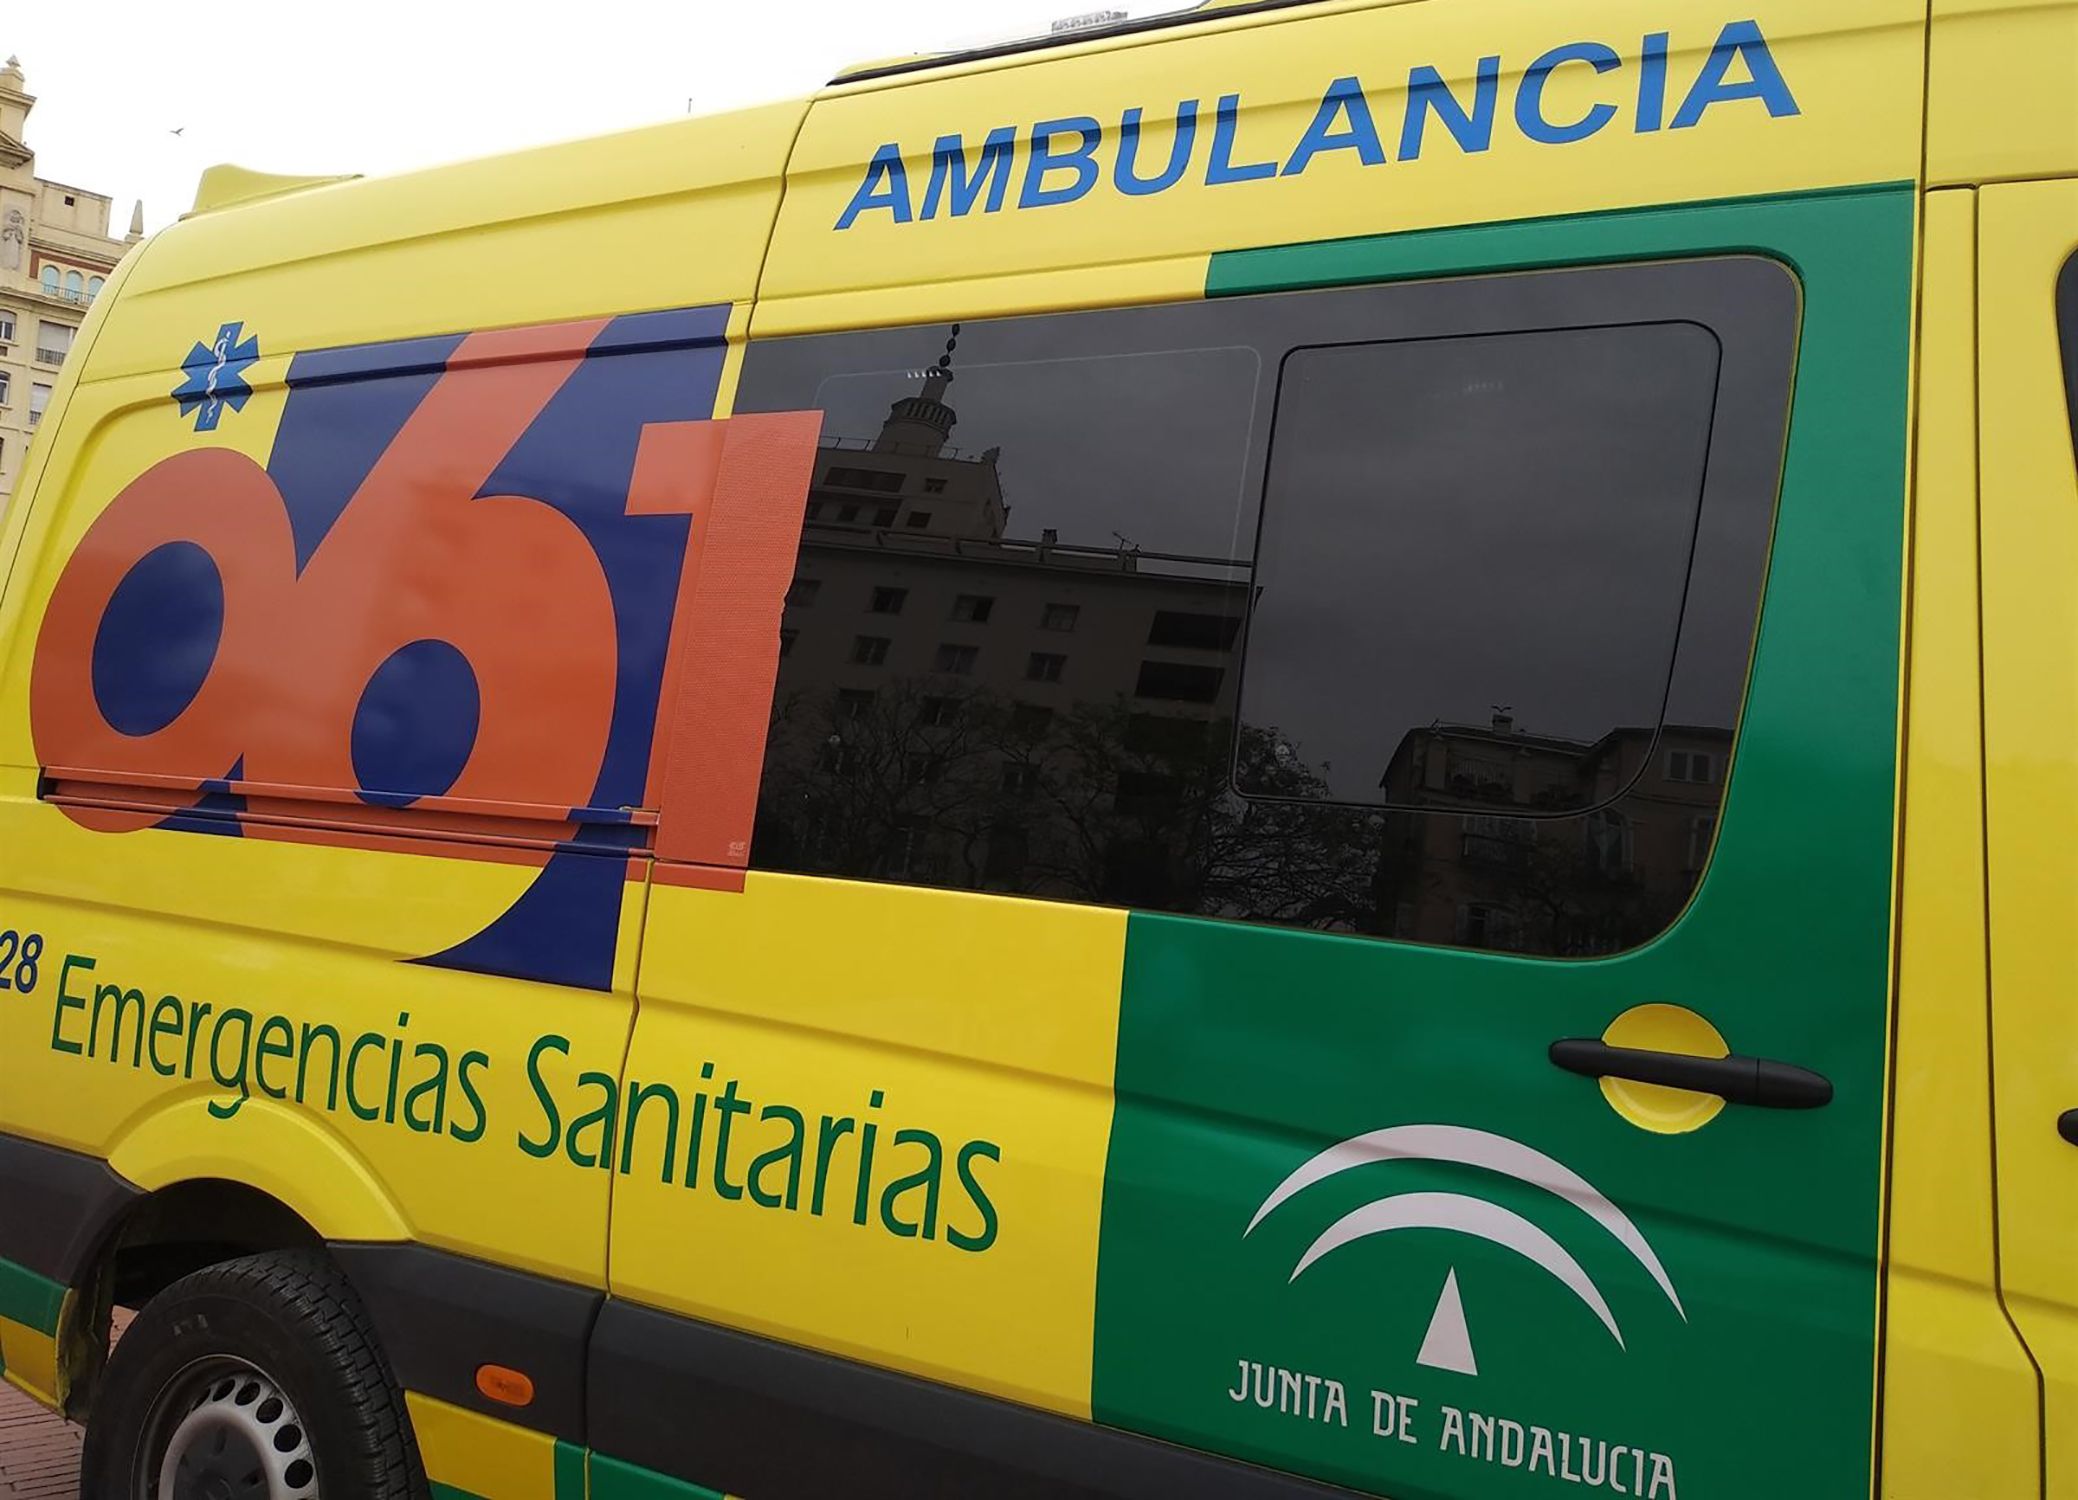 Ambulancia 061 Andalucía